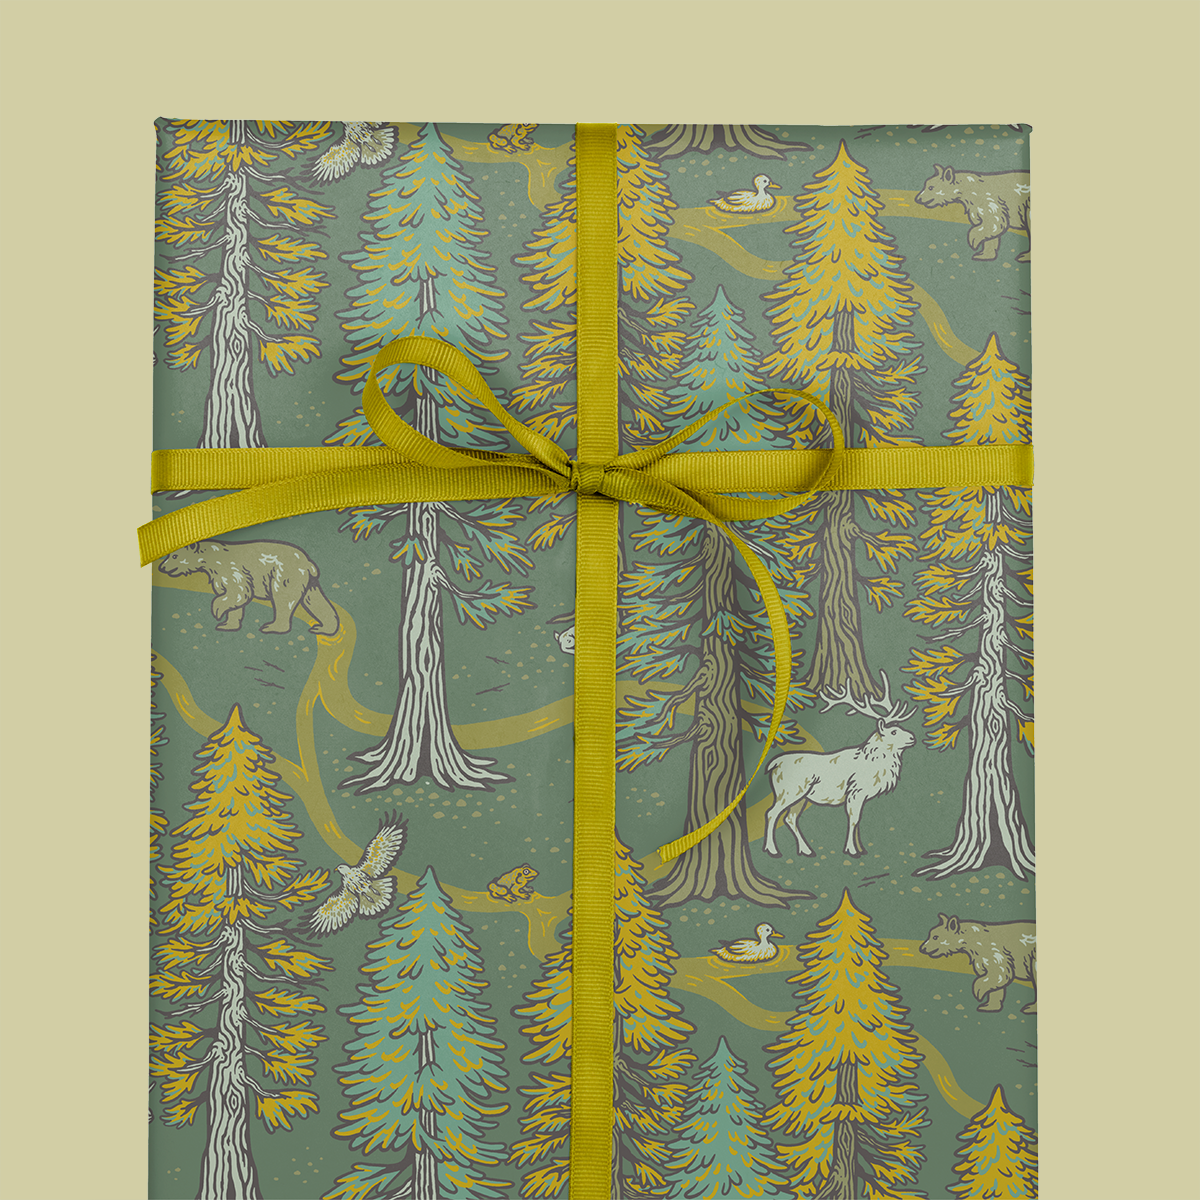 Gift Wrap: Redwoods